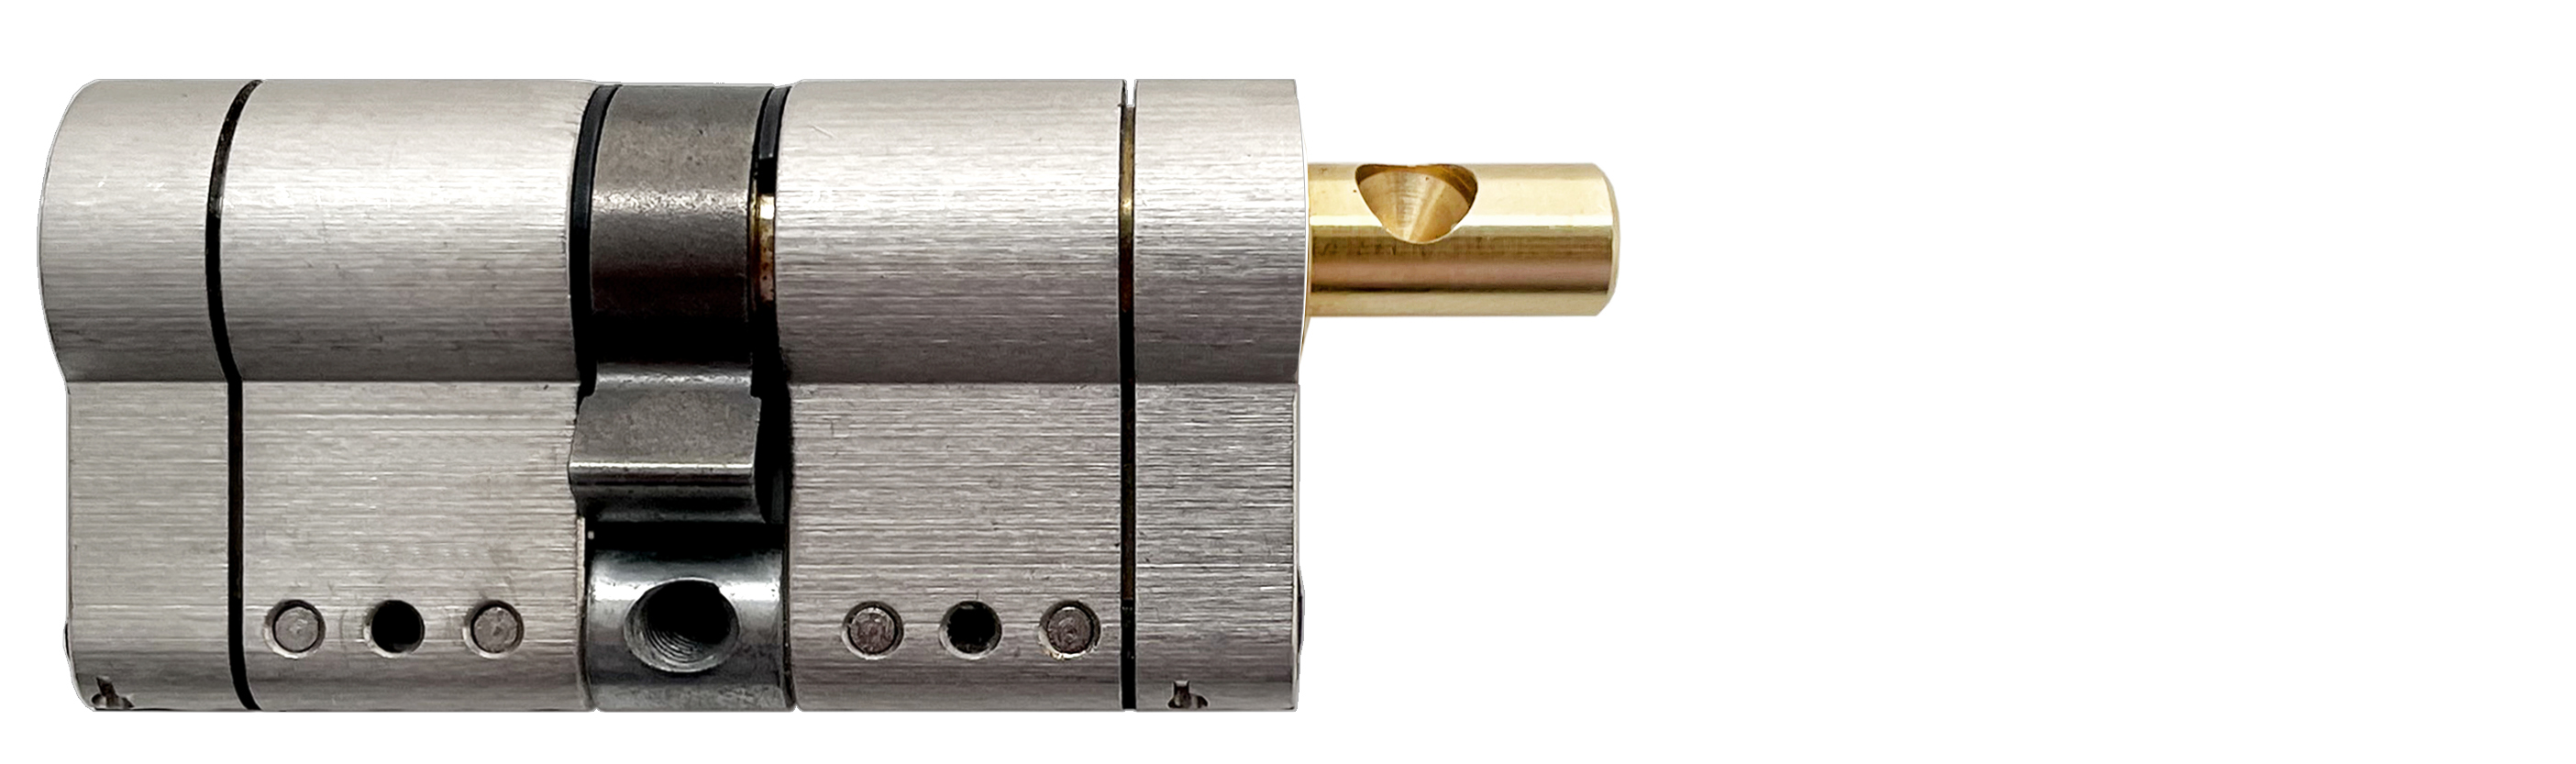 Цилиндр MOTTURA PRO 67(31+36)мм, ключ/вертушка, никель цилиндр mottura pro 87 41 46 мм ключ вертушка никель